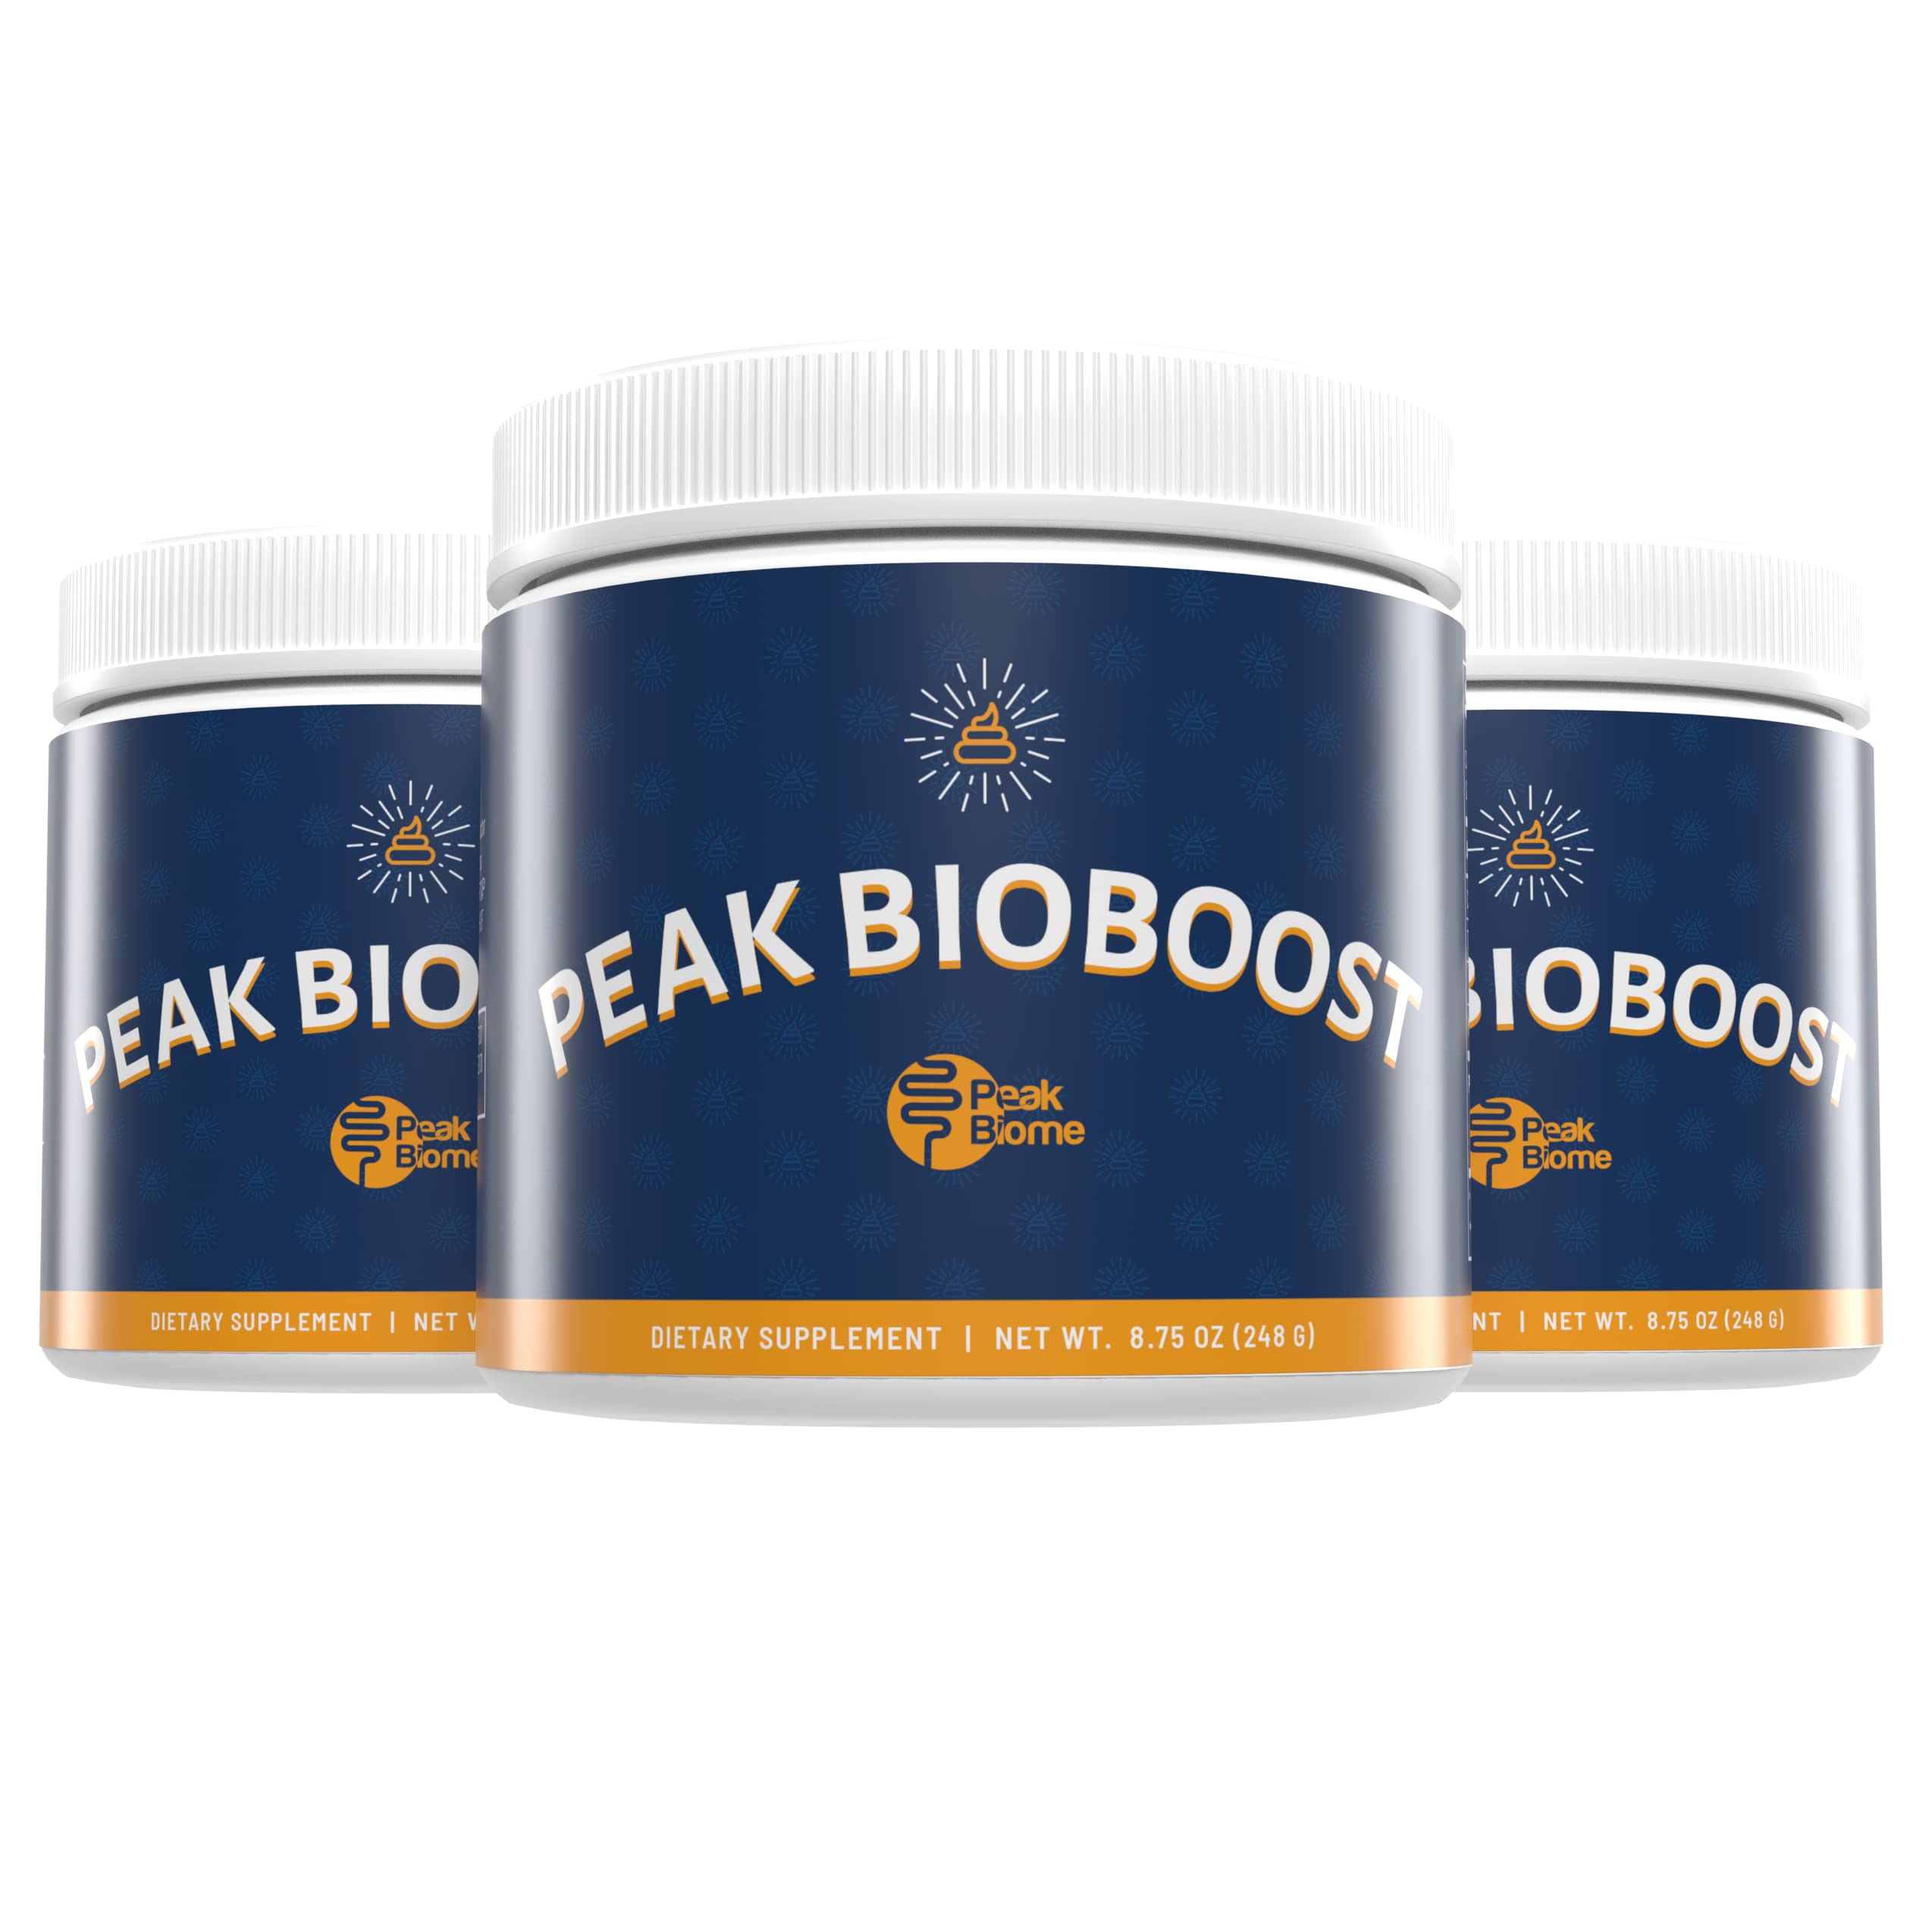 is peak bioboost legit